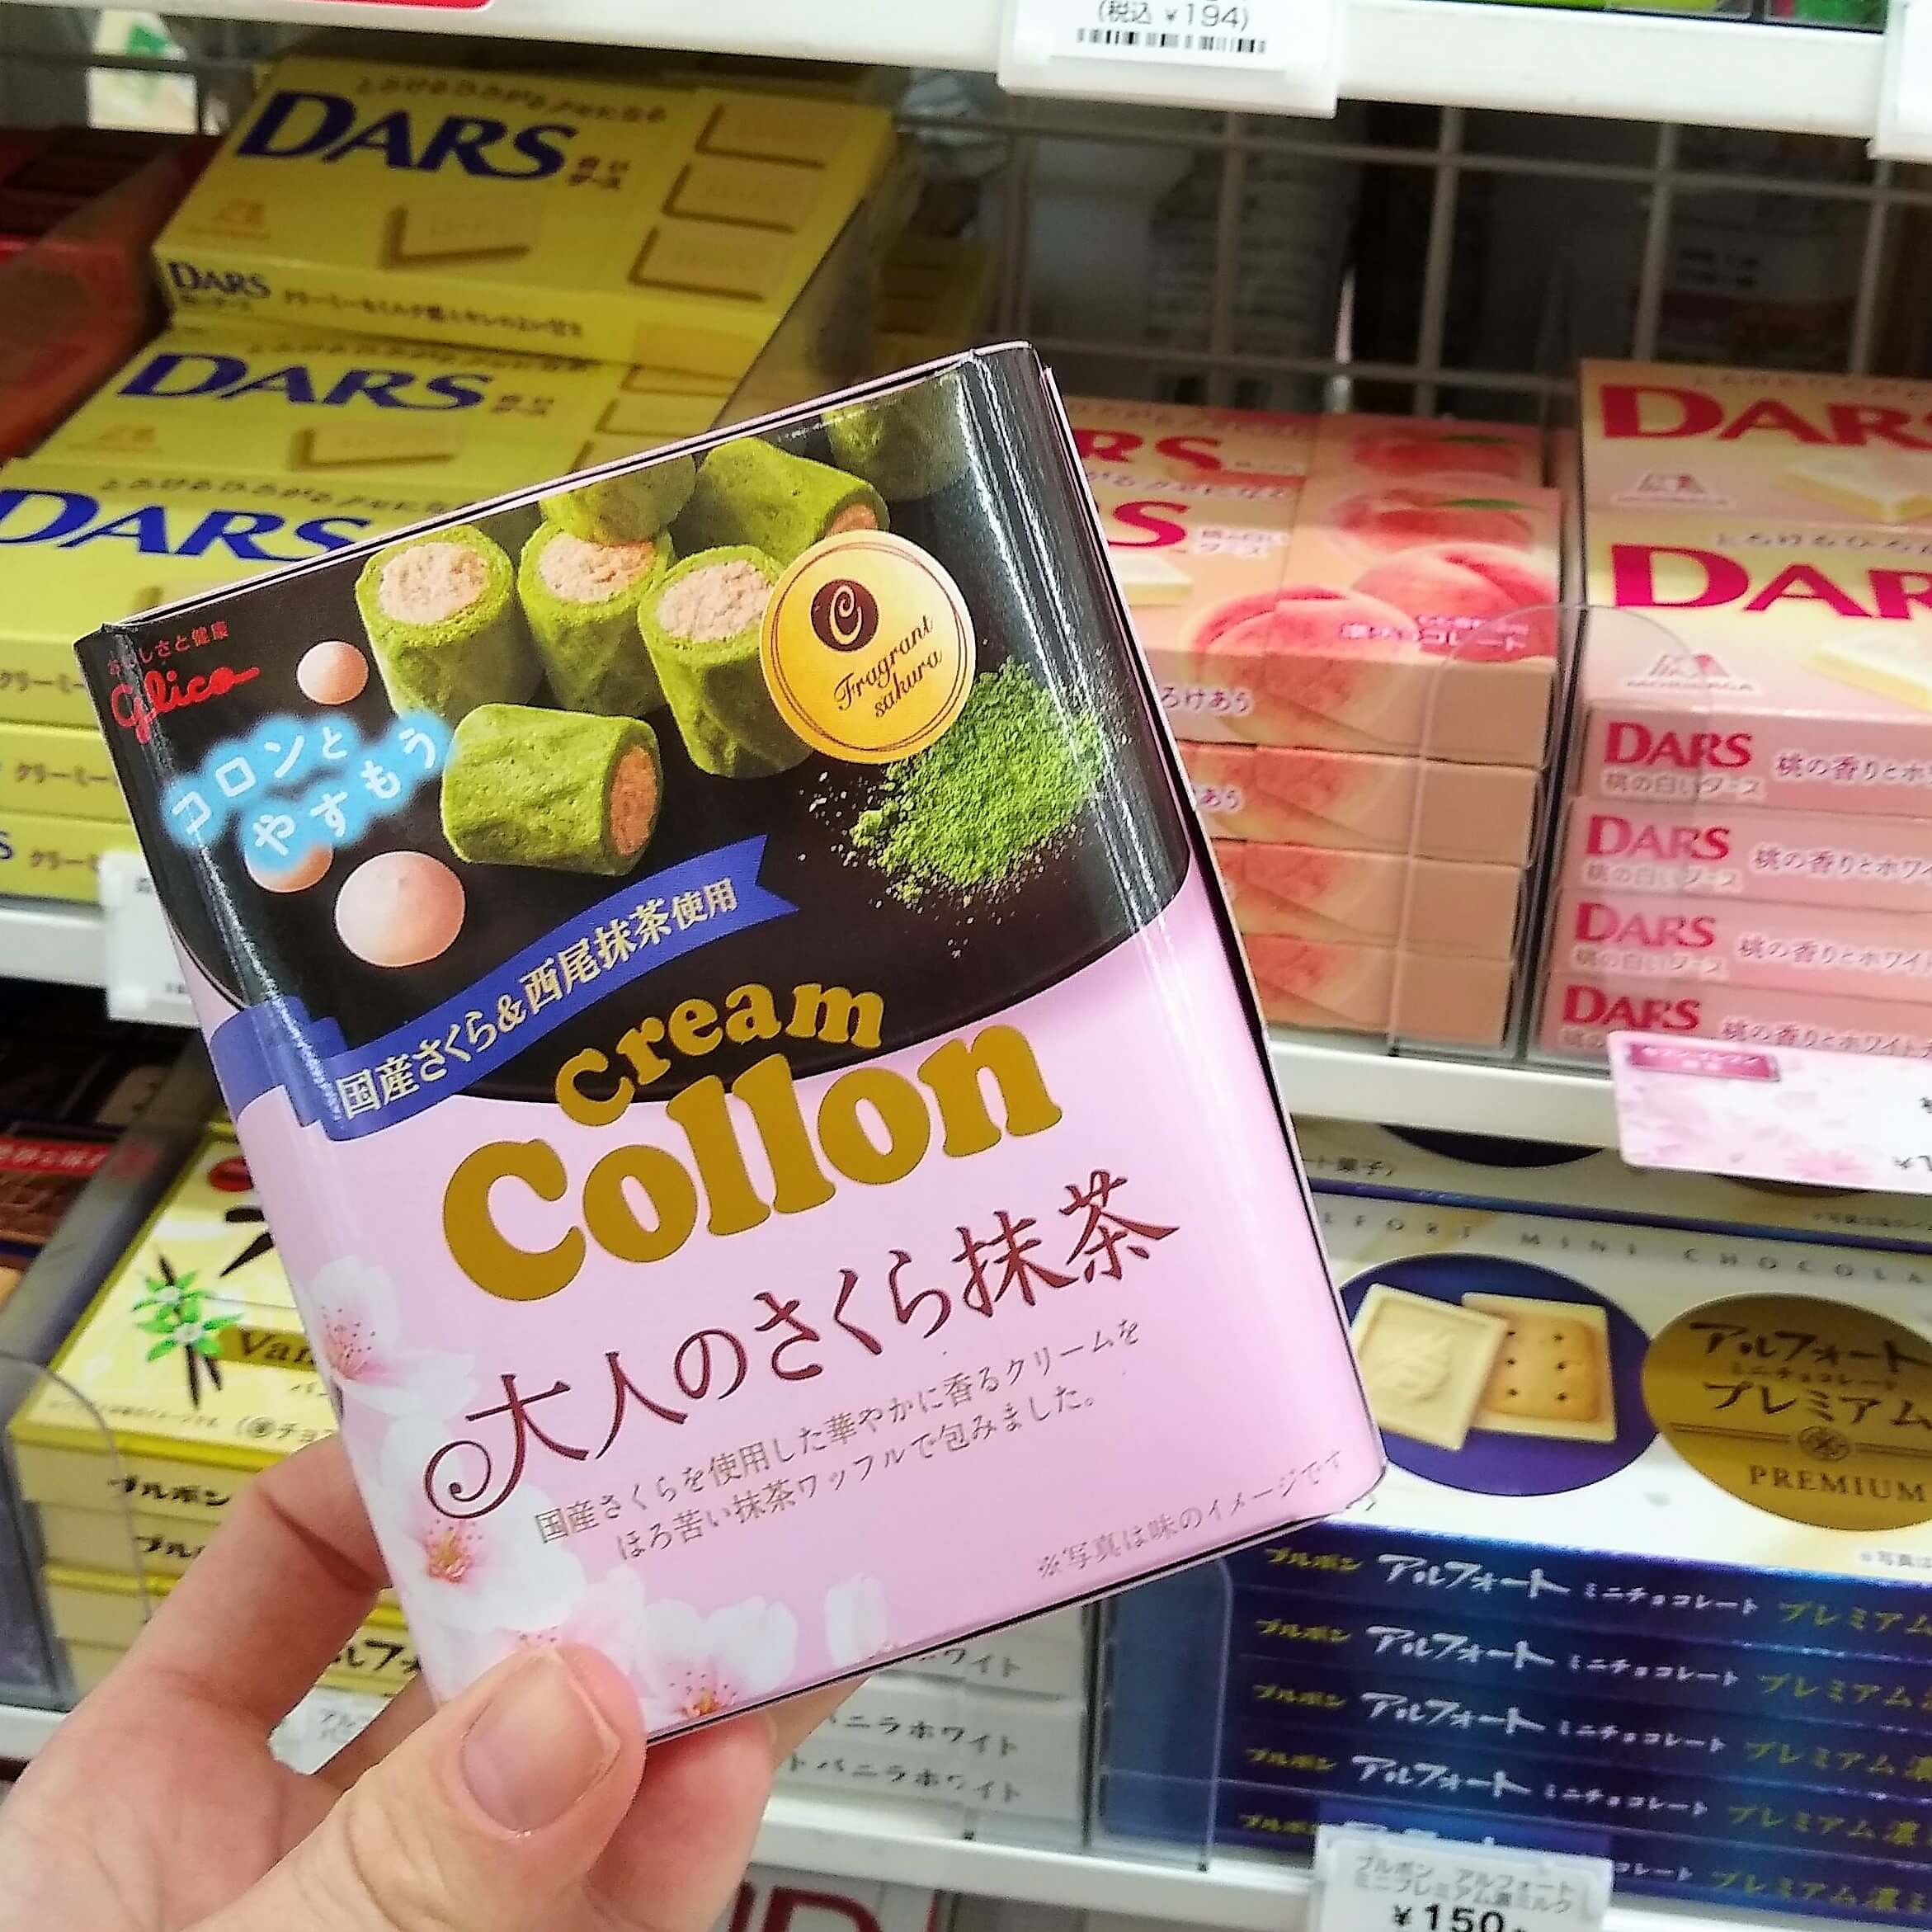 Sakura-Matcha Cream Collon